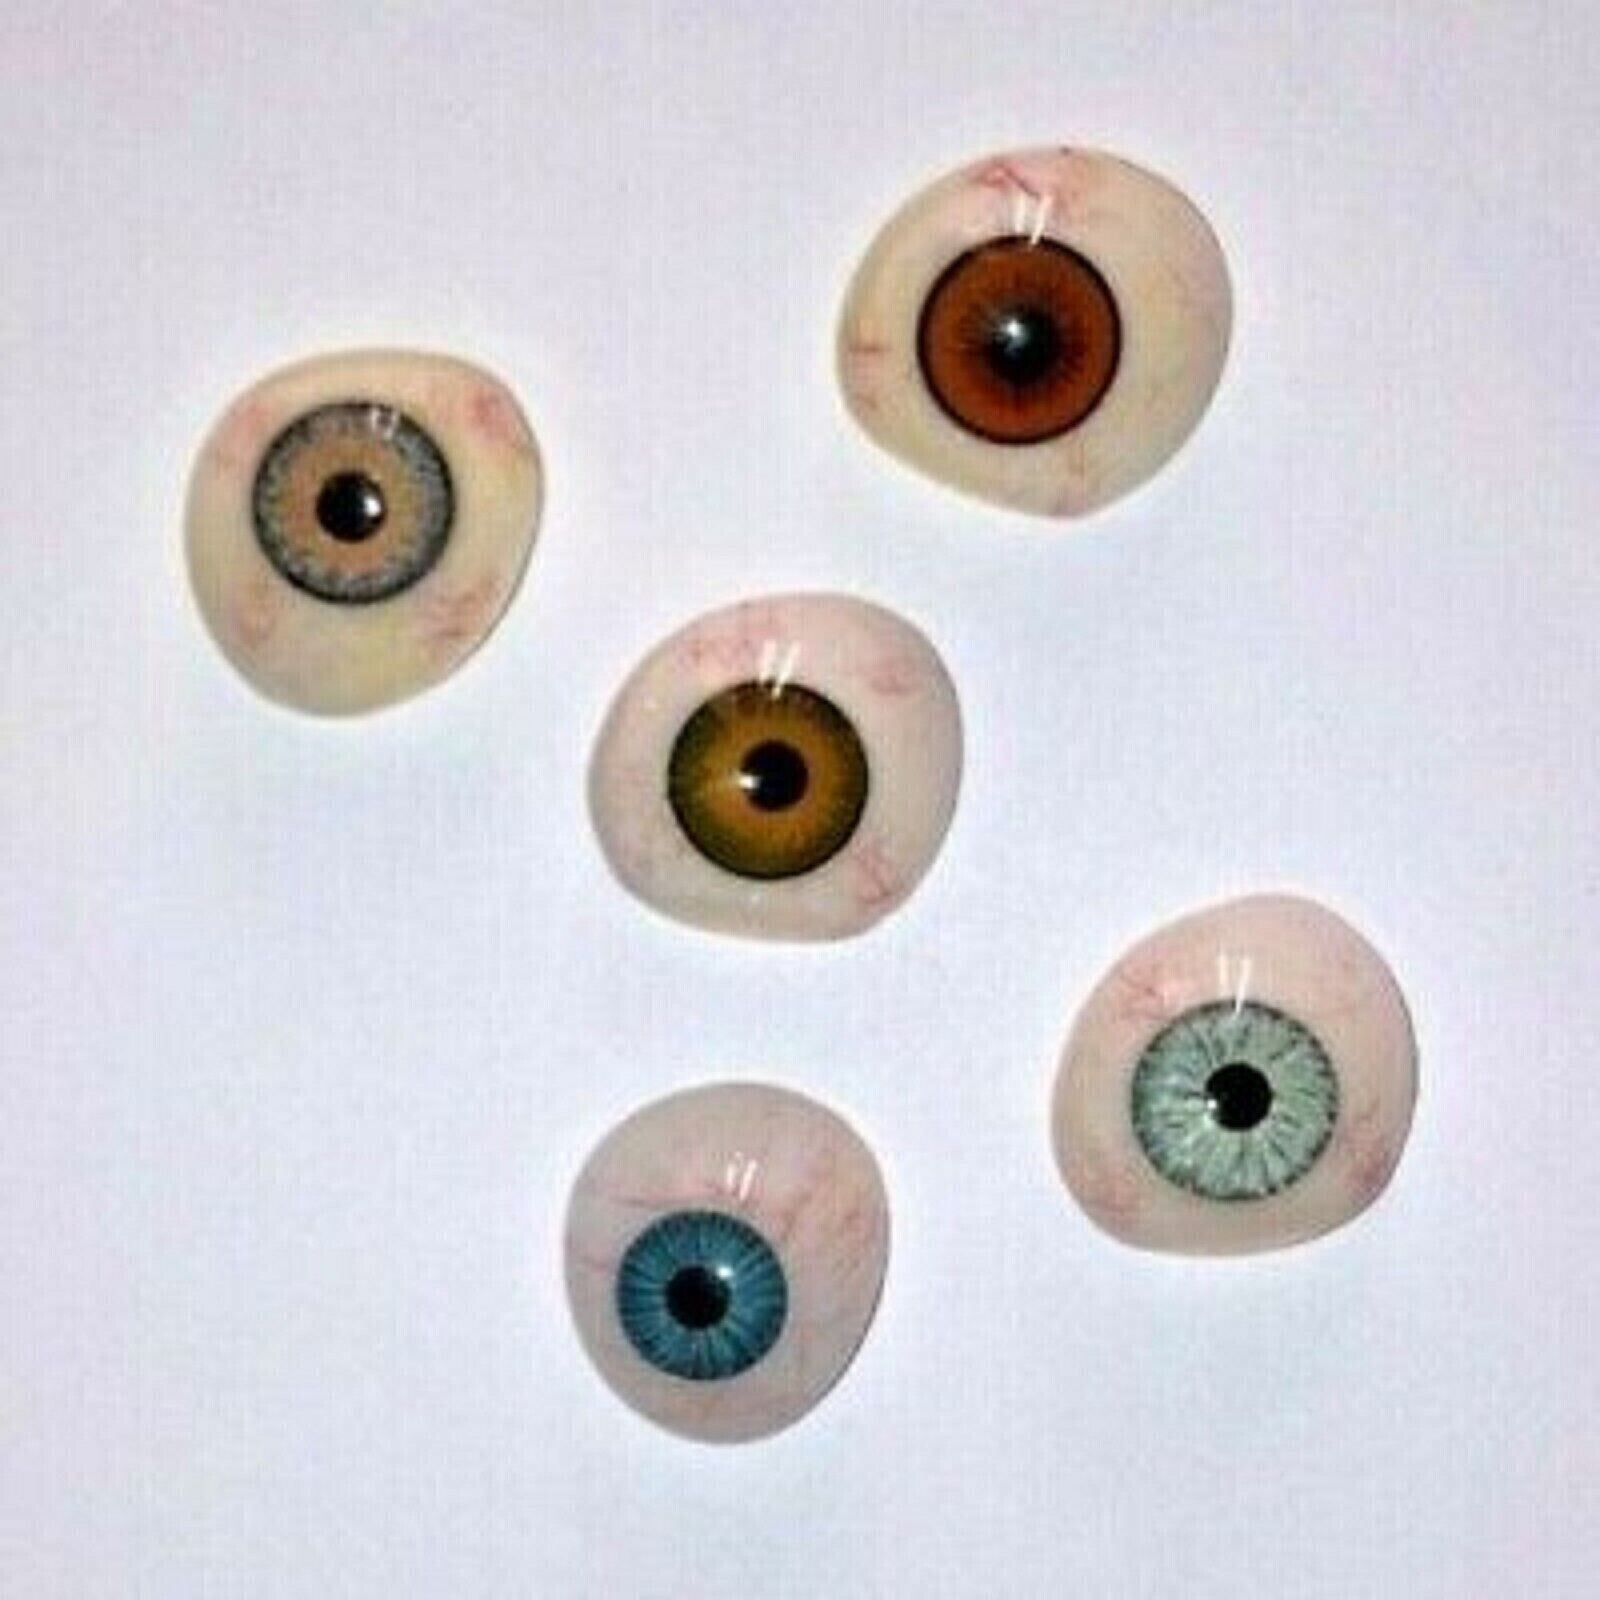 Antique Artificial Mix Eye Set Of 5 Pcs Vintage Human Prosthetic Eye